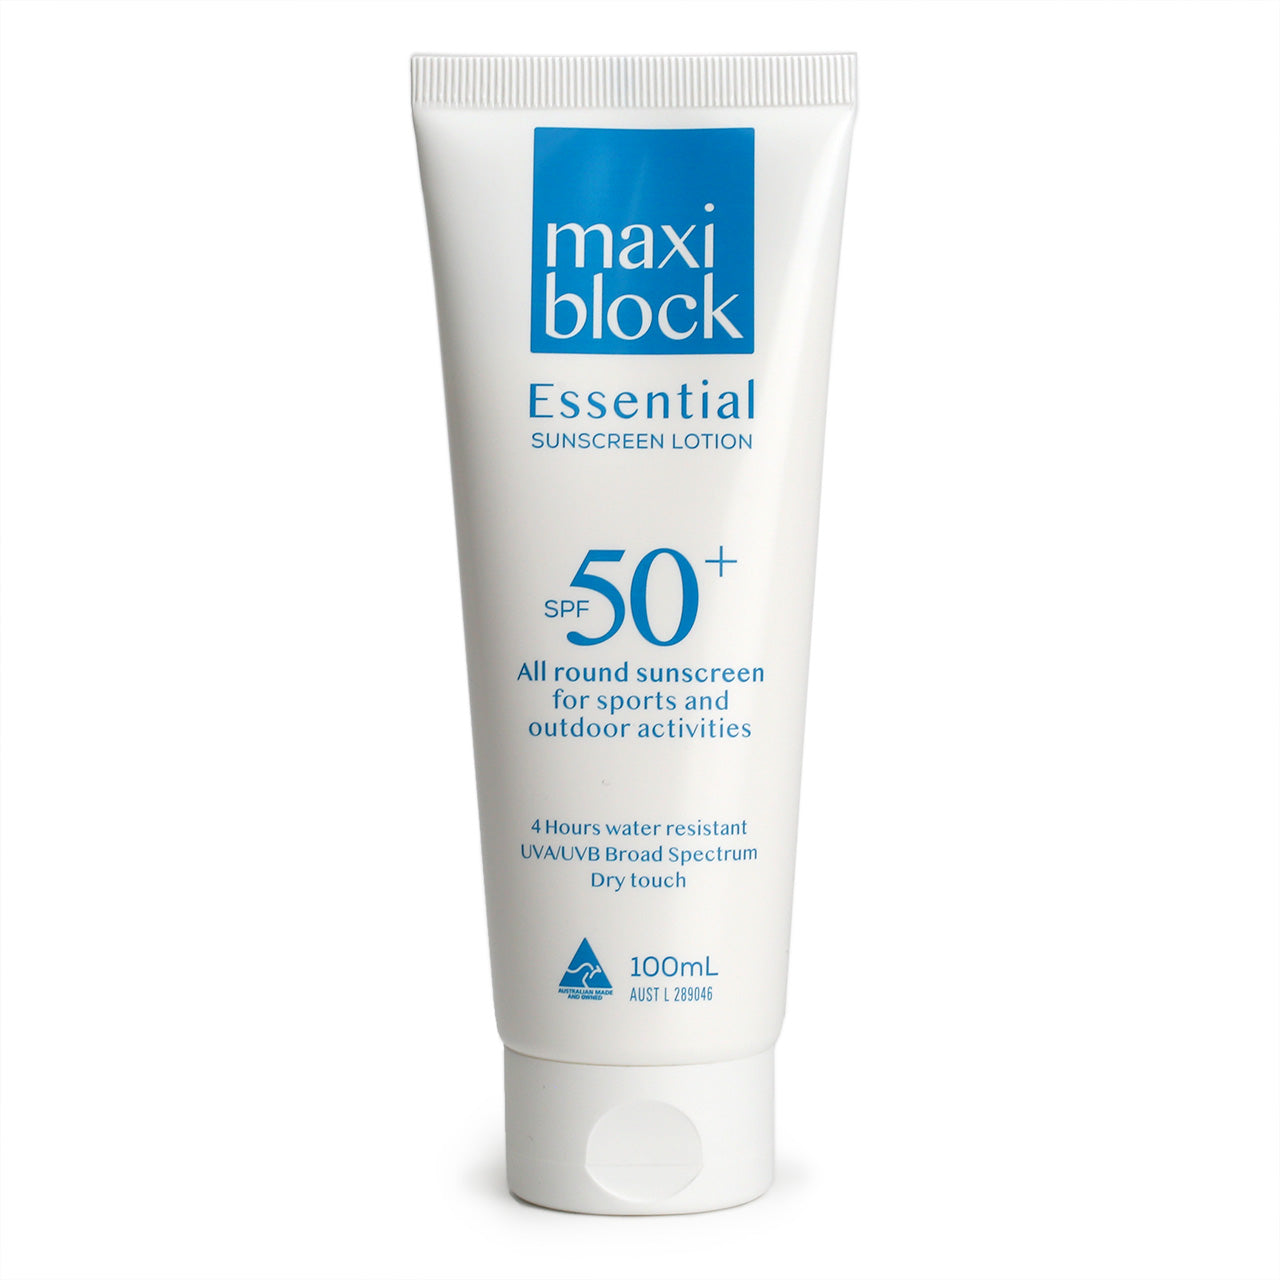 Maxiblock Essential Sunscreen in white tube 100ml